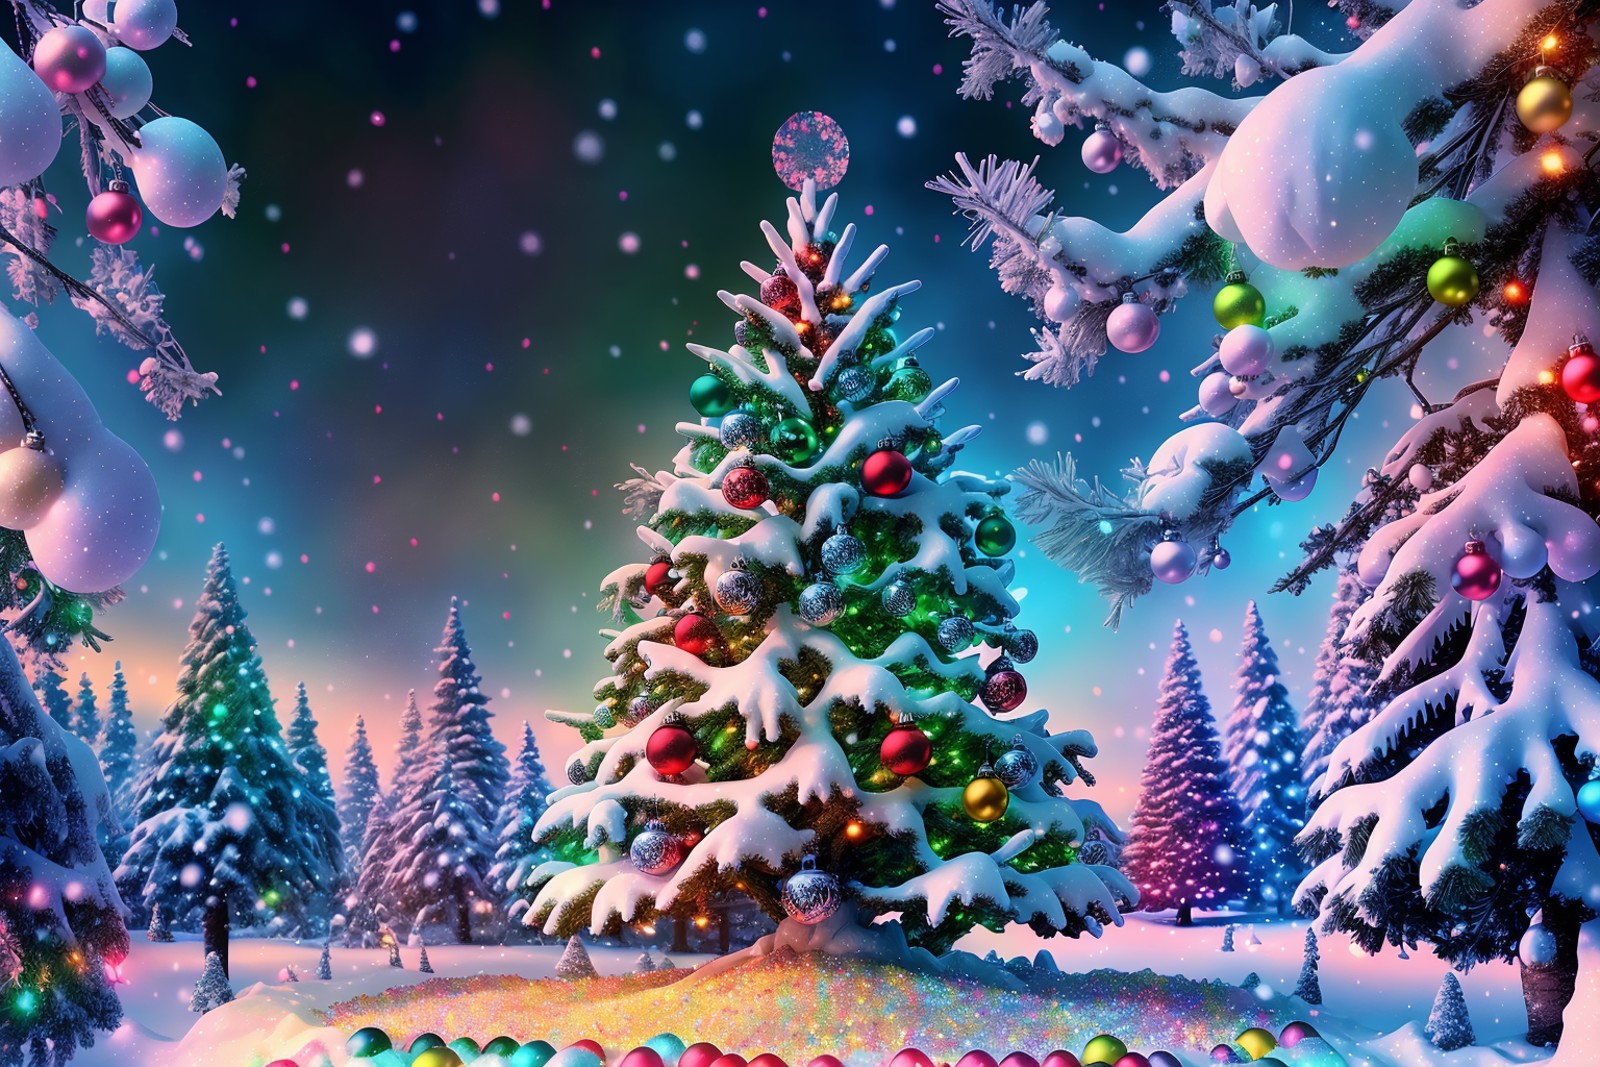 <lora:Xmas3:0.7> Xmas snow covered colorful tree, ornaments, fantasy, cinematic